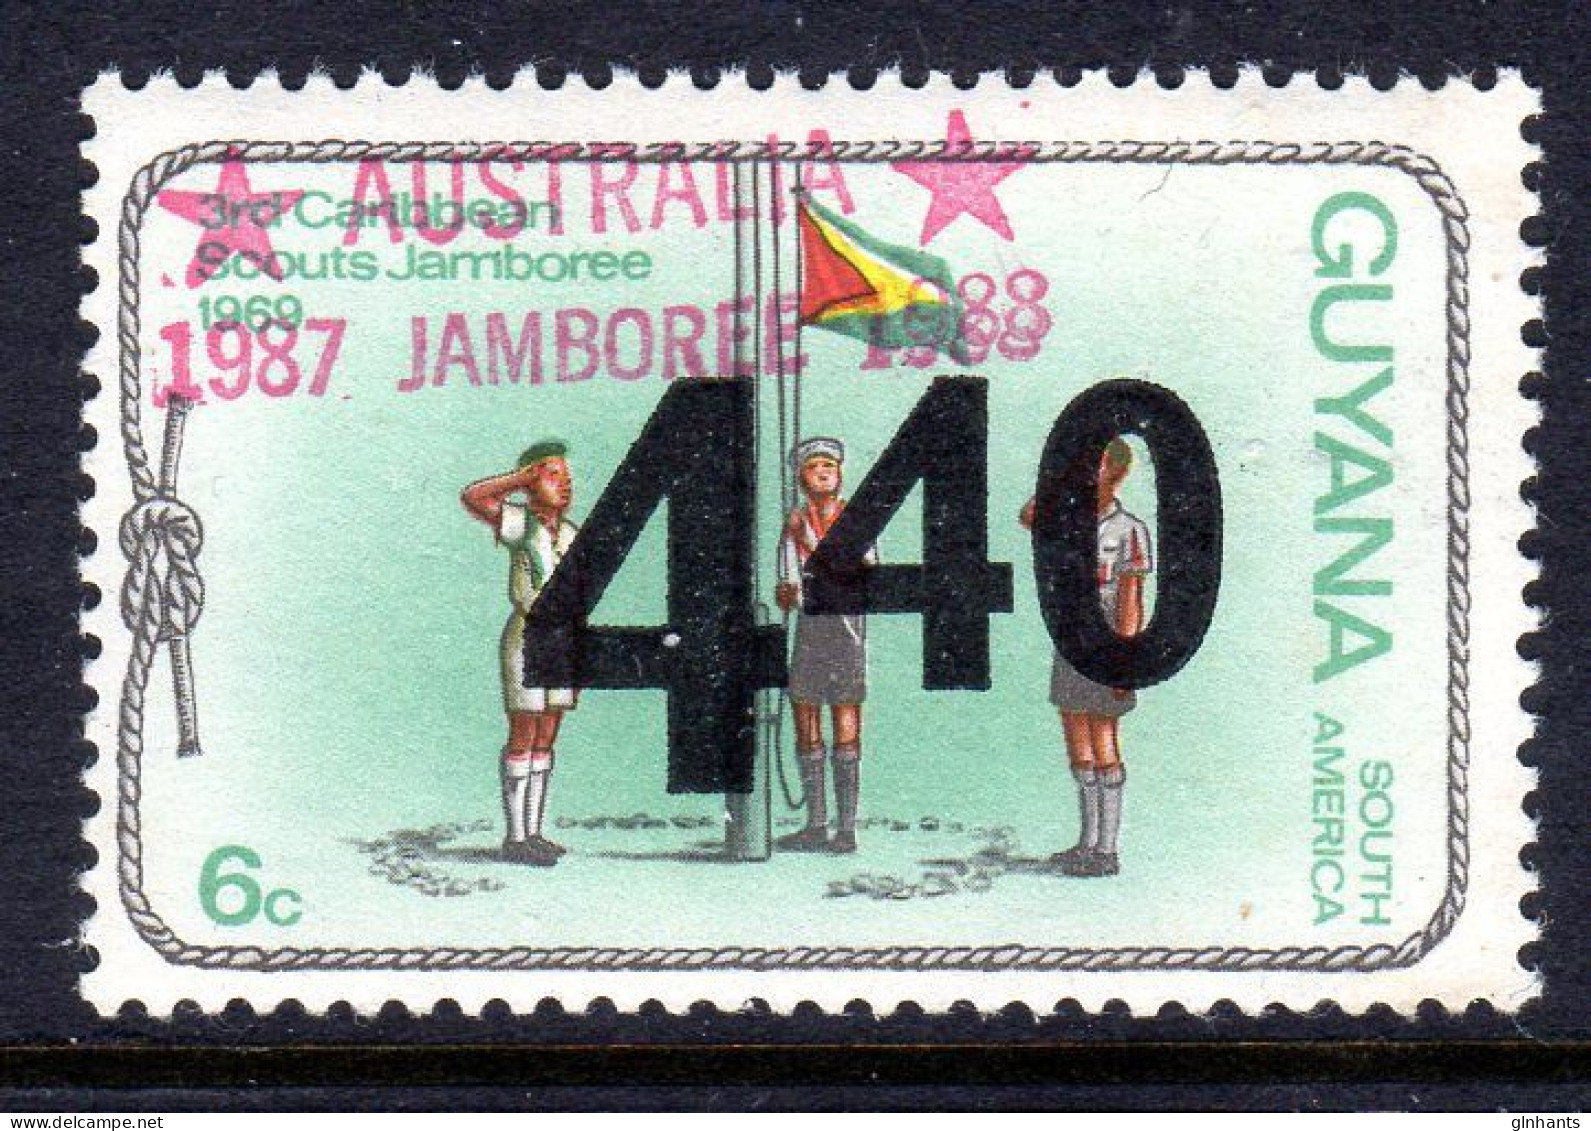 GUYANA - 1988 440 ON 6c AUSTRALIA JAMBOREE OVERPRINT FINE MNH ** SG 2266 REF B - Guiana (1966-...)